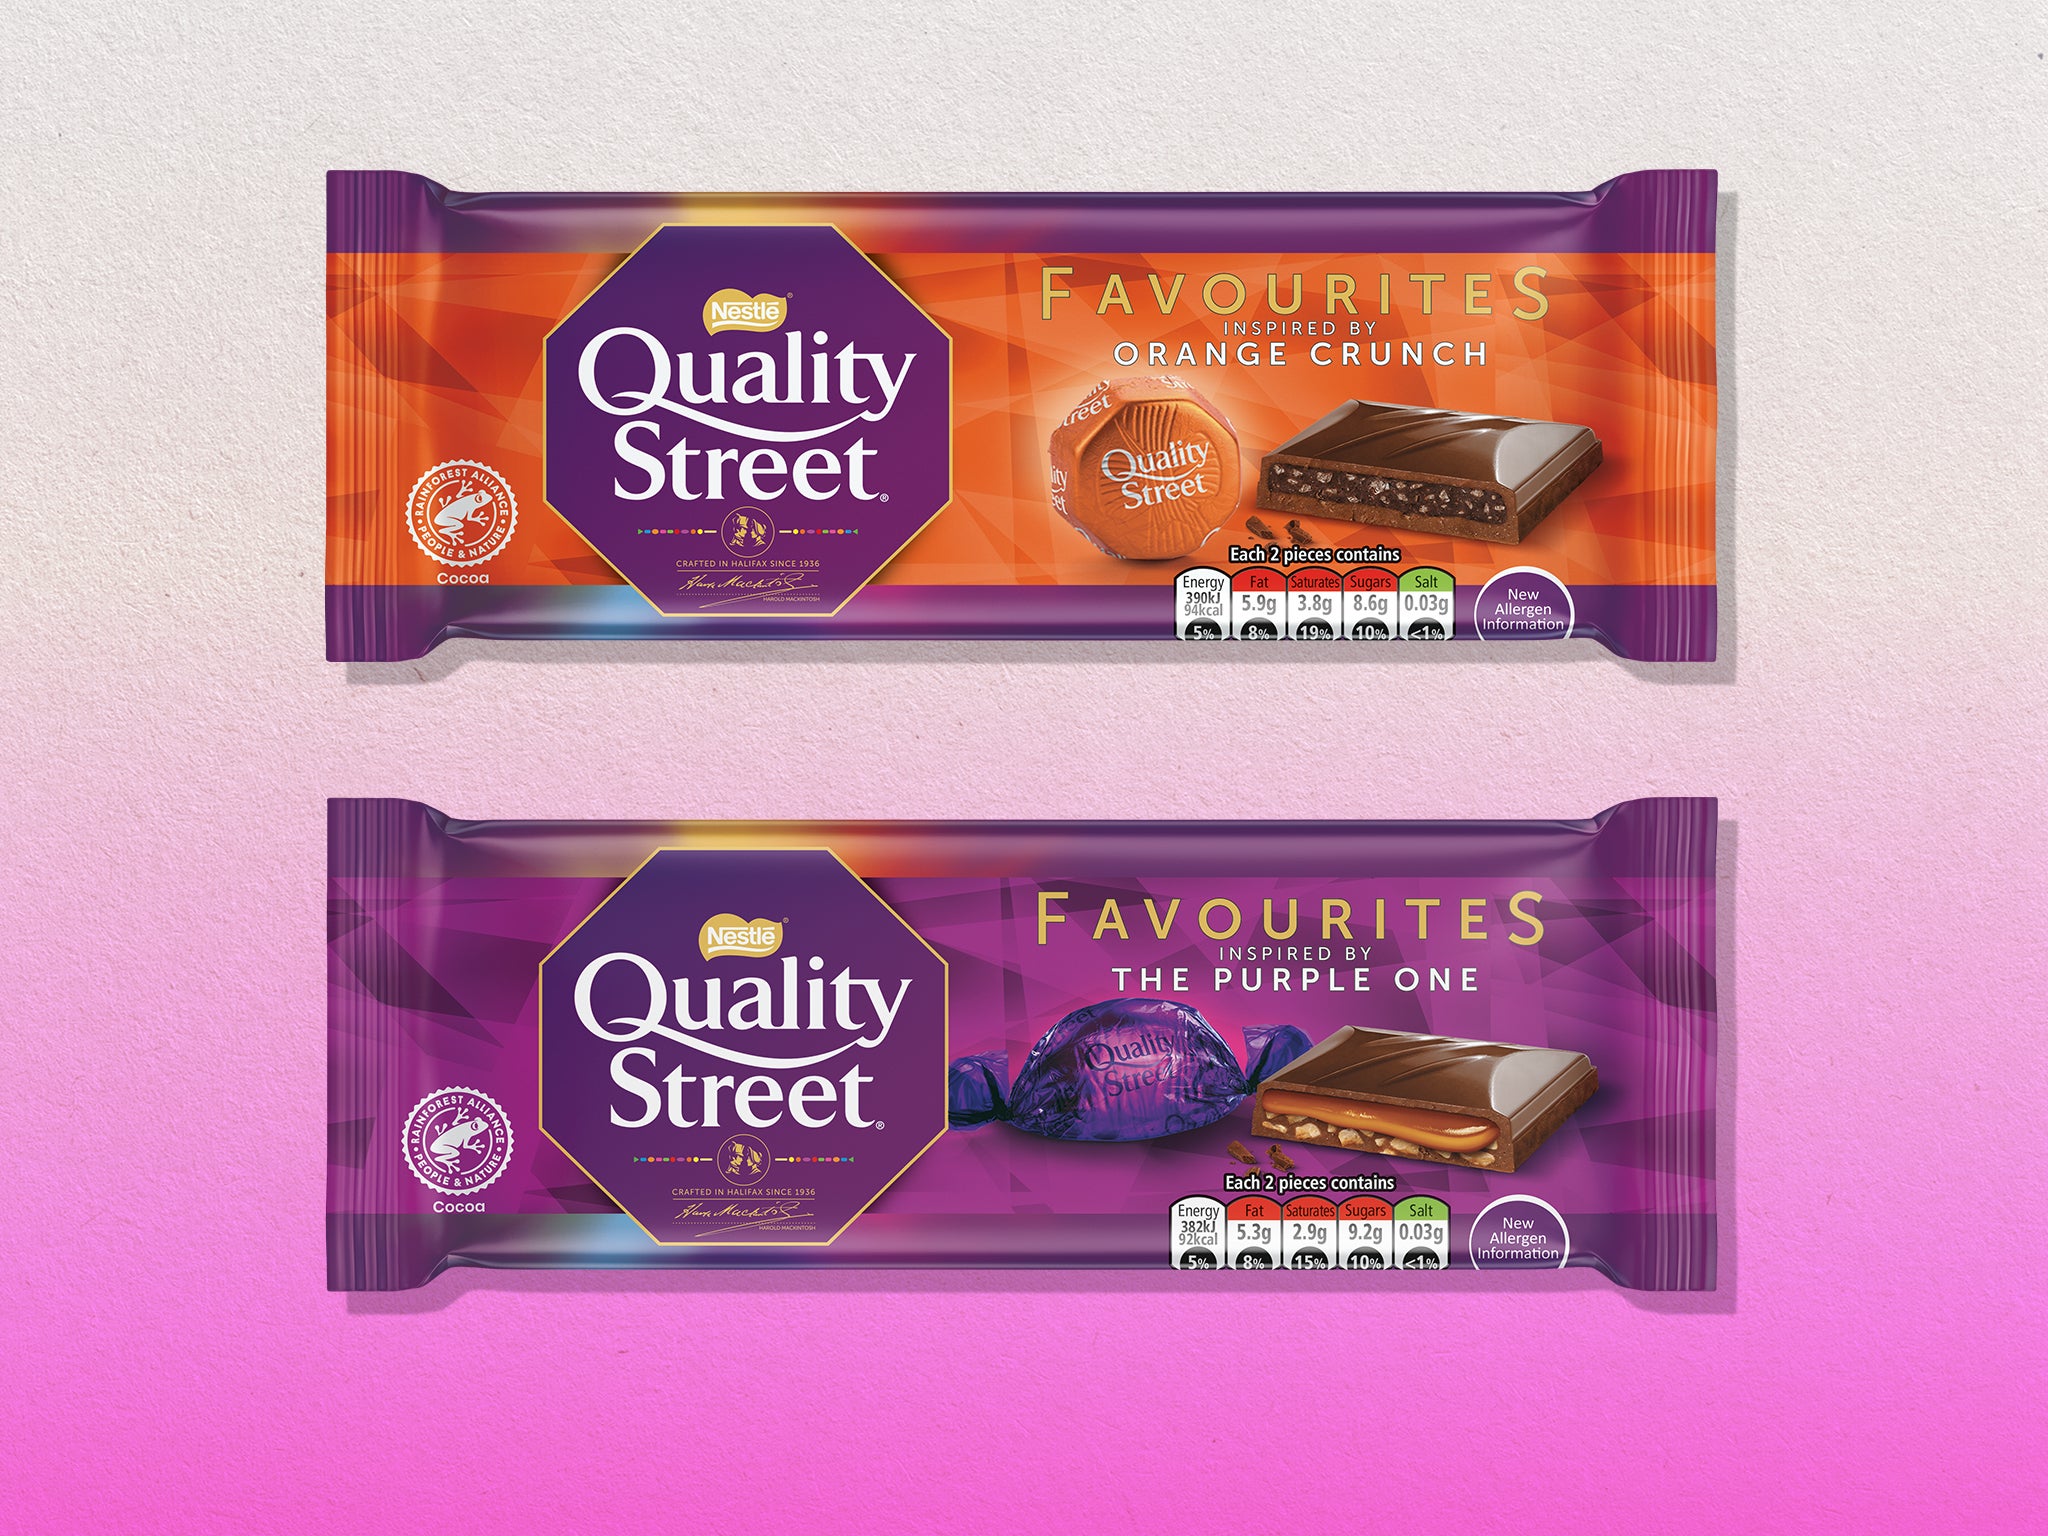 The new Quality Street chocolate bars